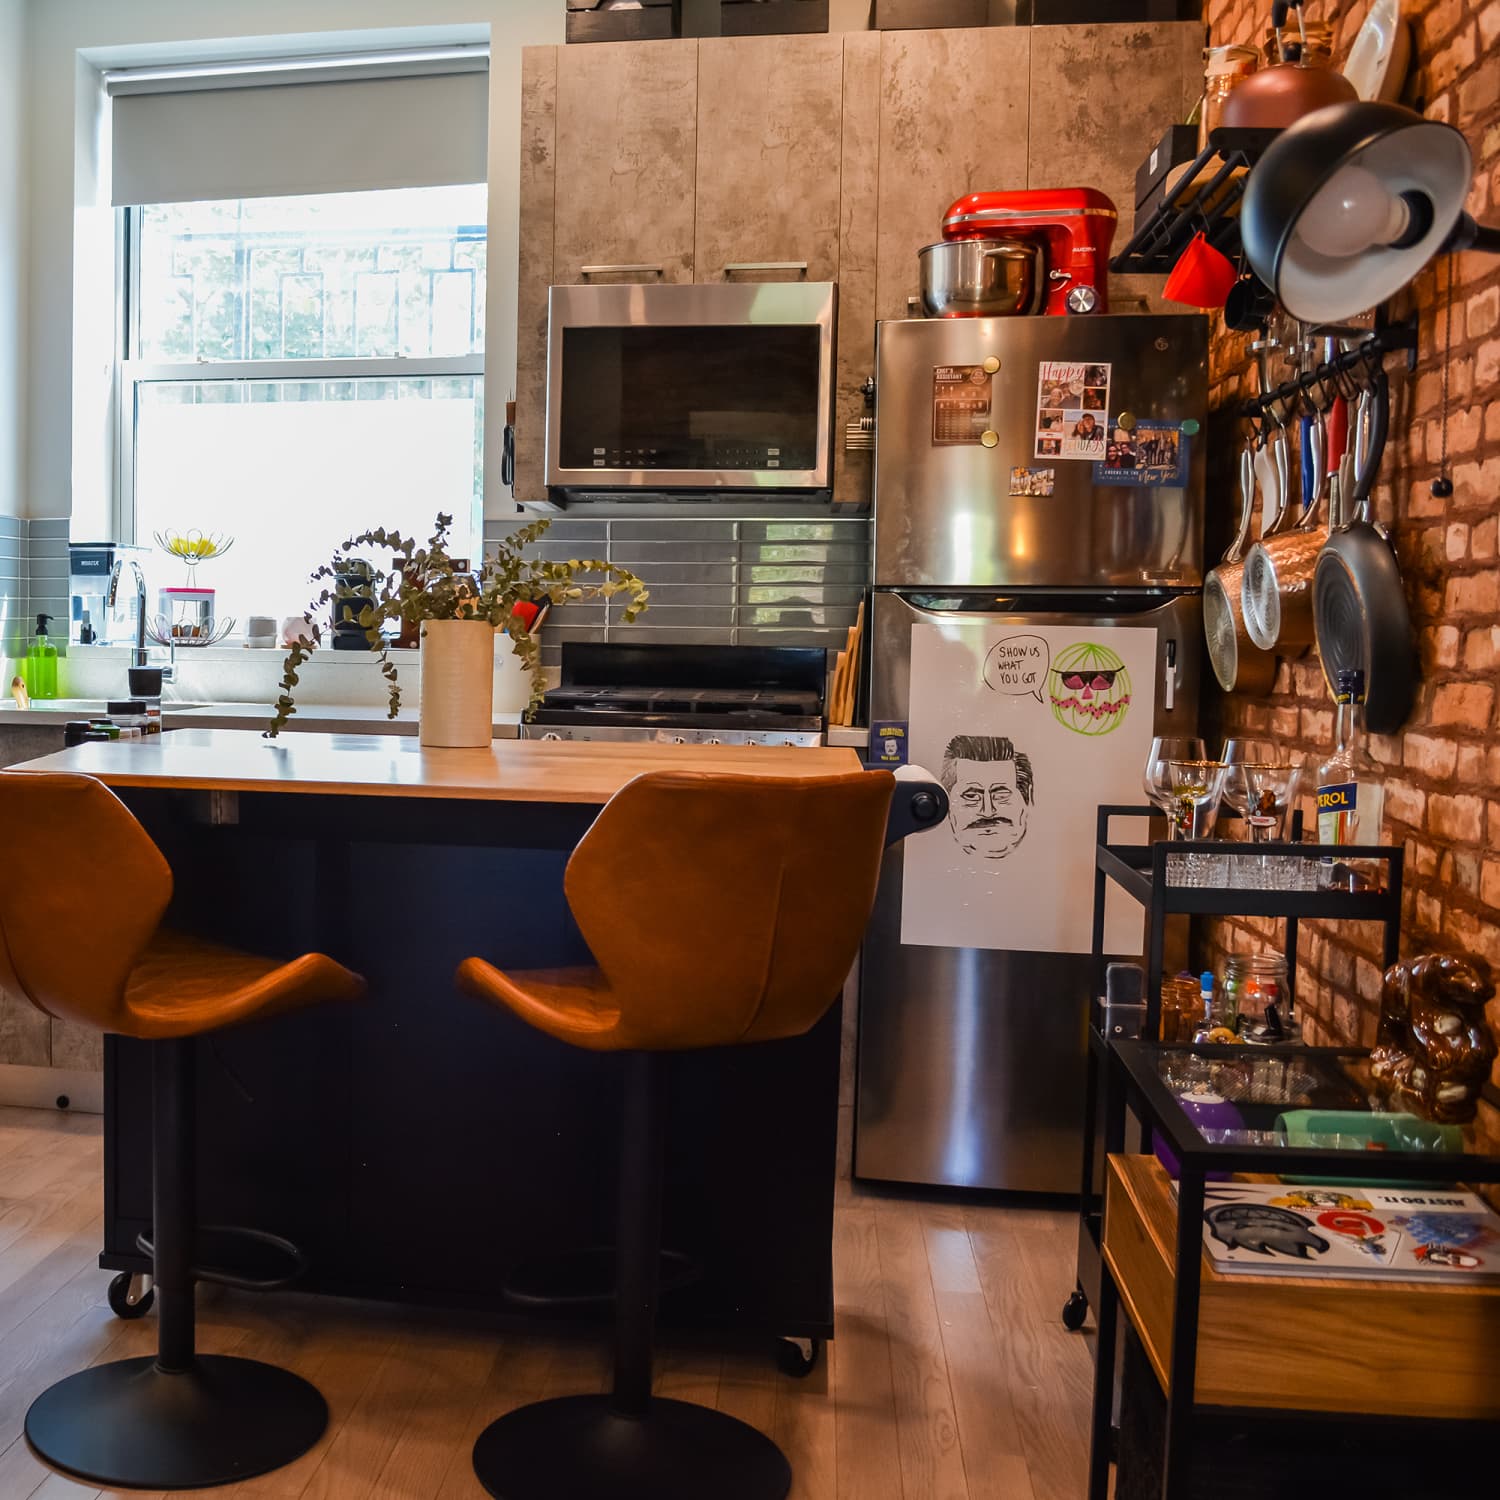 Smart Kitchen Storage Ideas From This Tiny Brooklyn Studio ...